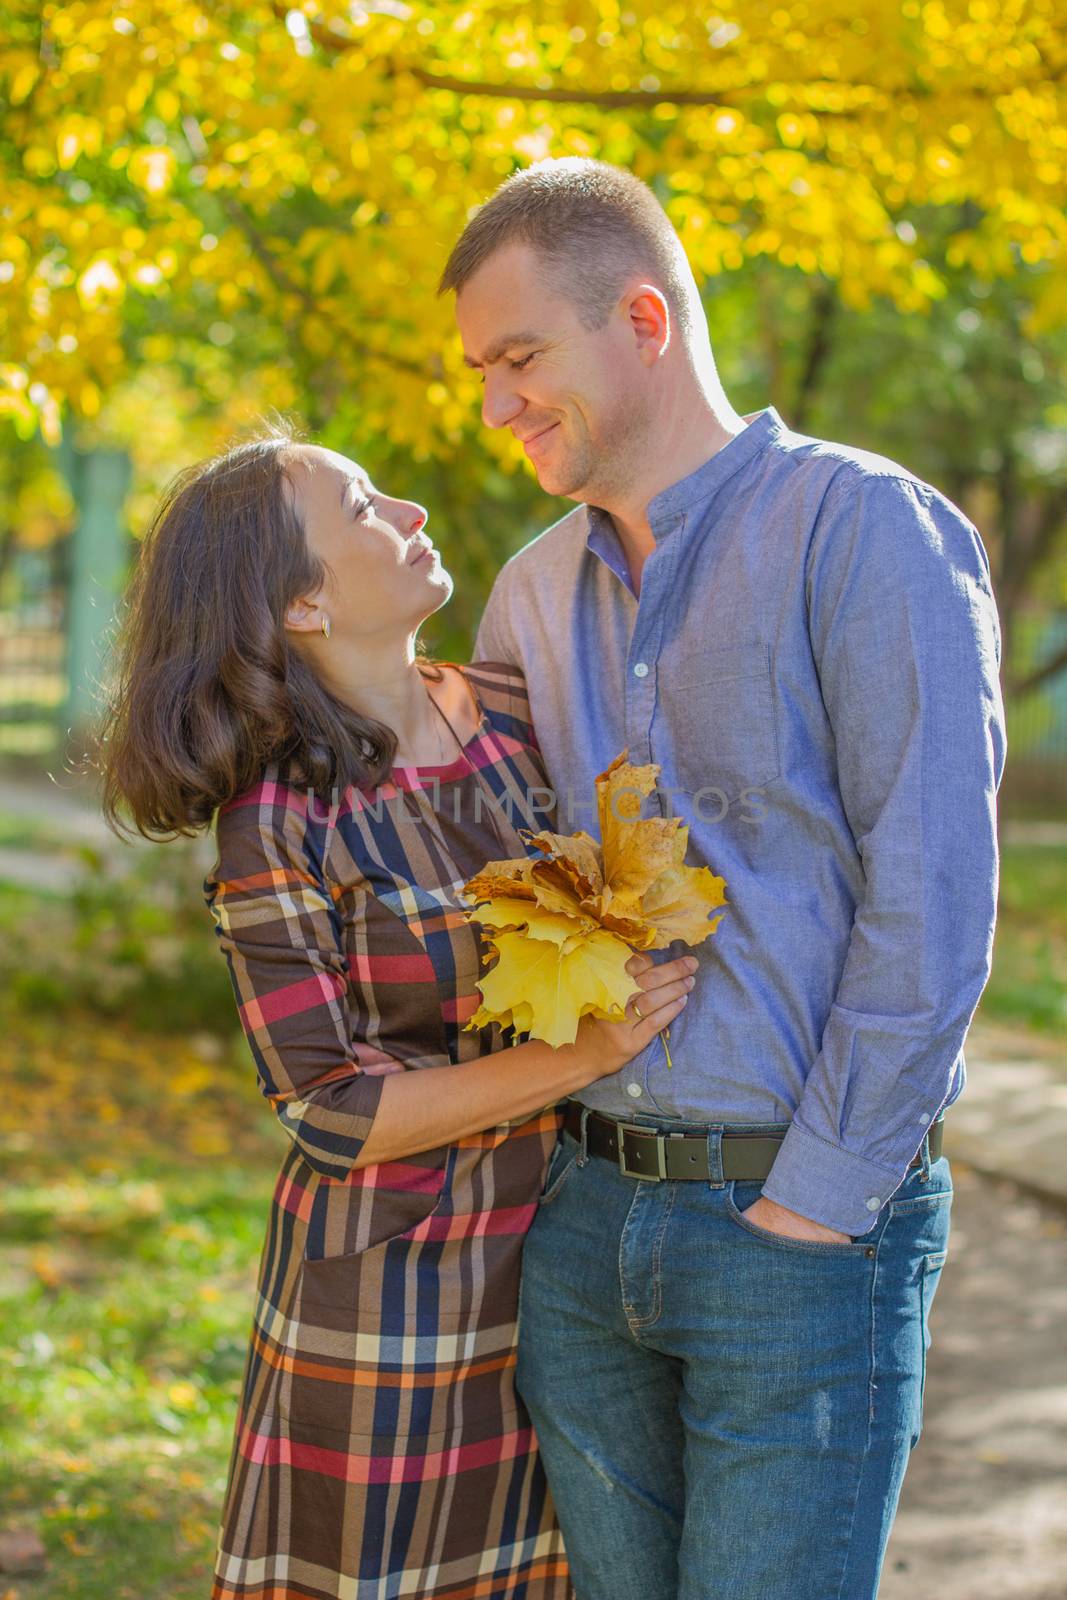 Loving couple hugging among yellow autumn trees